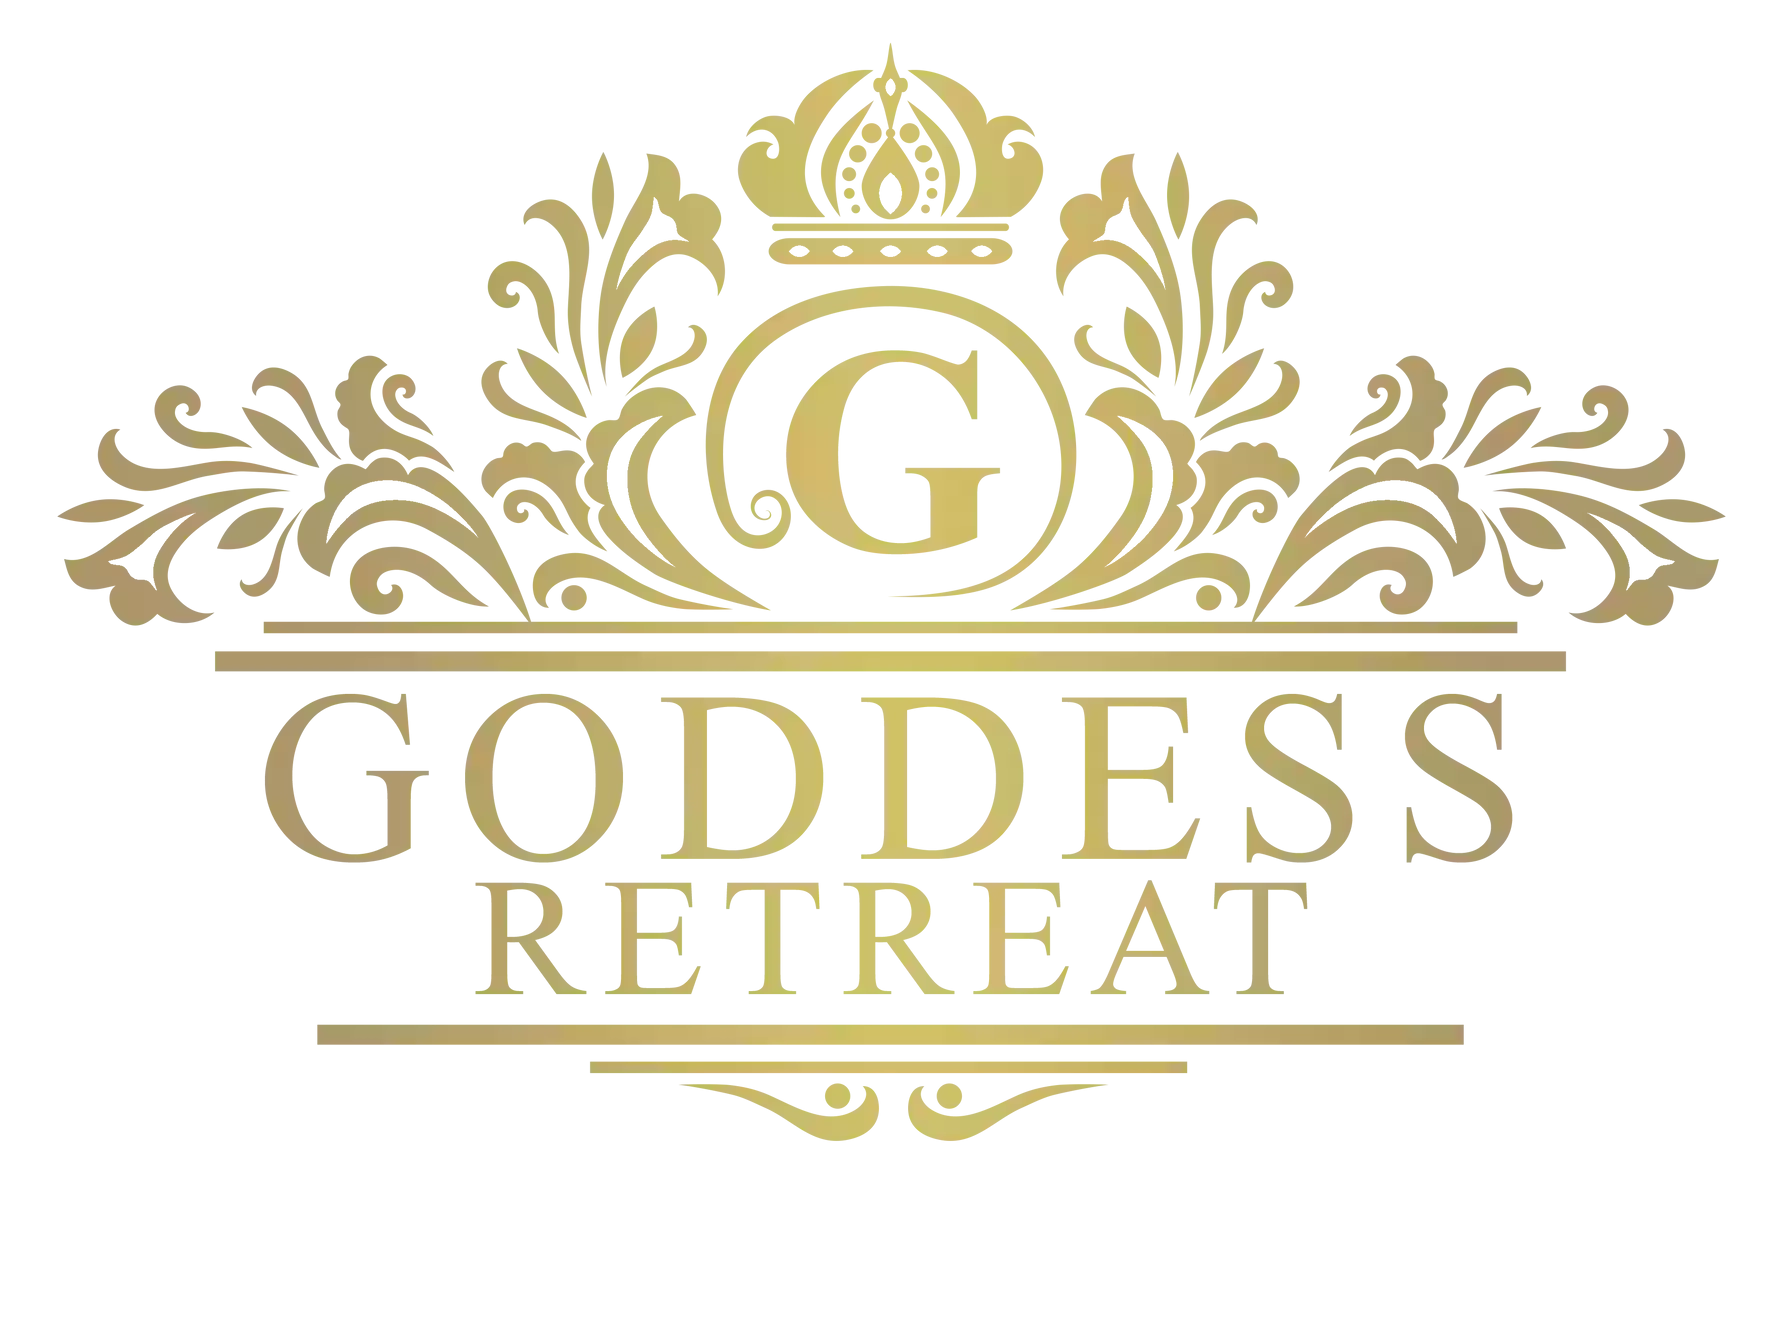 Goddess Retreat